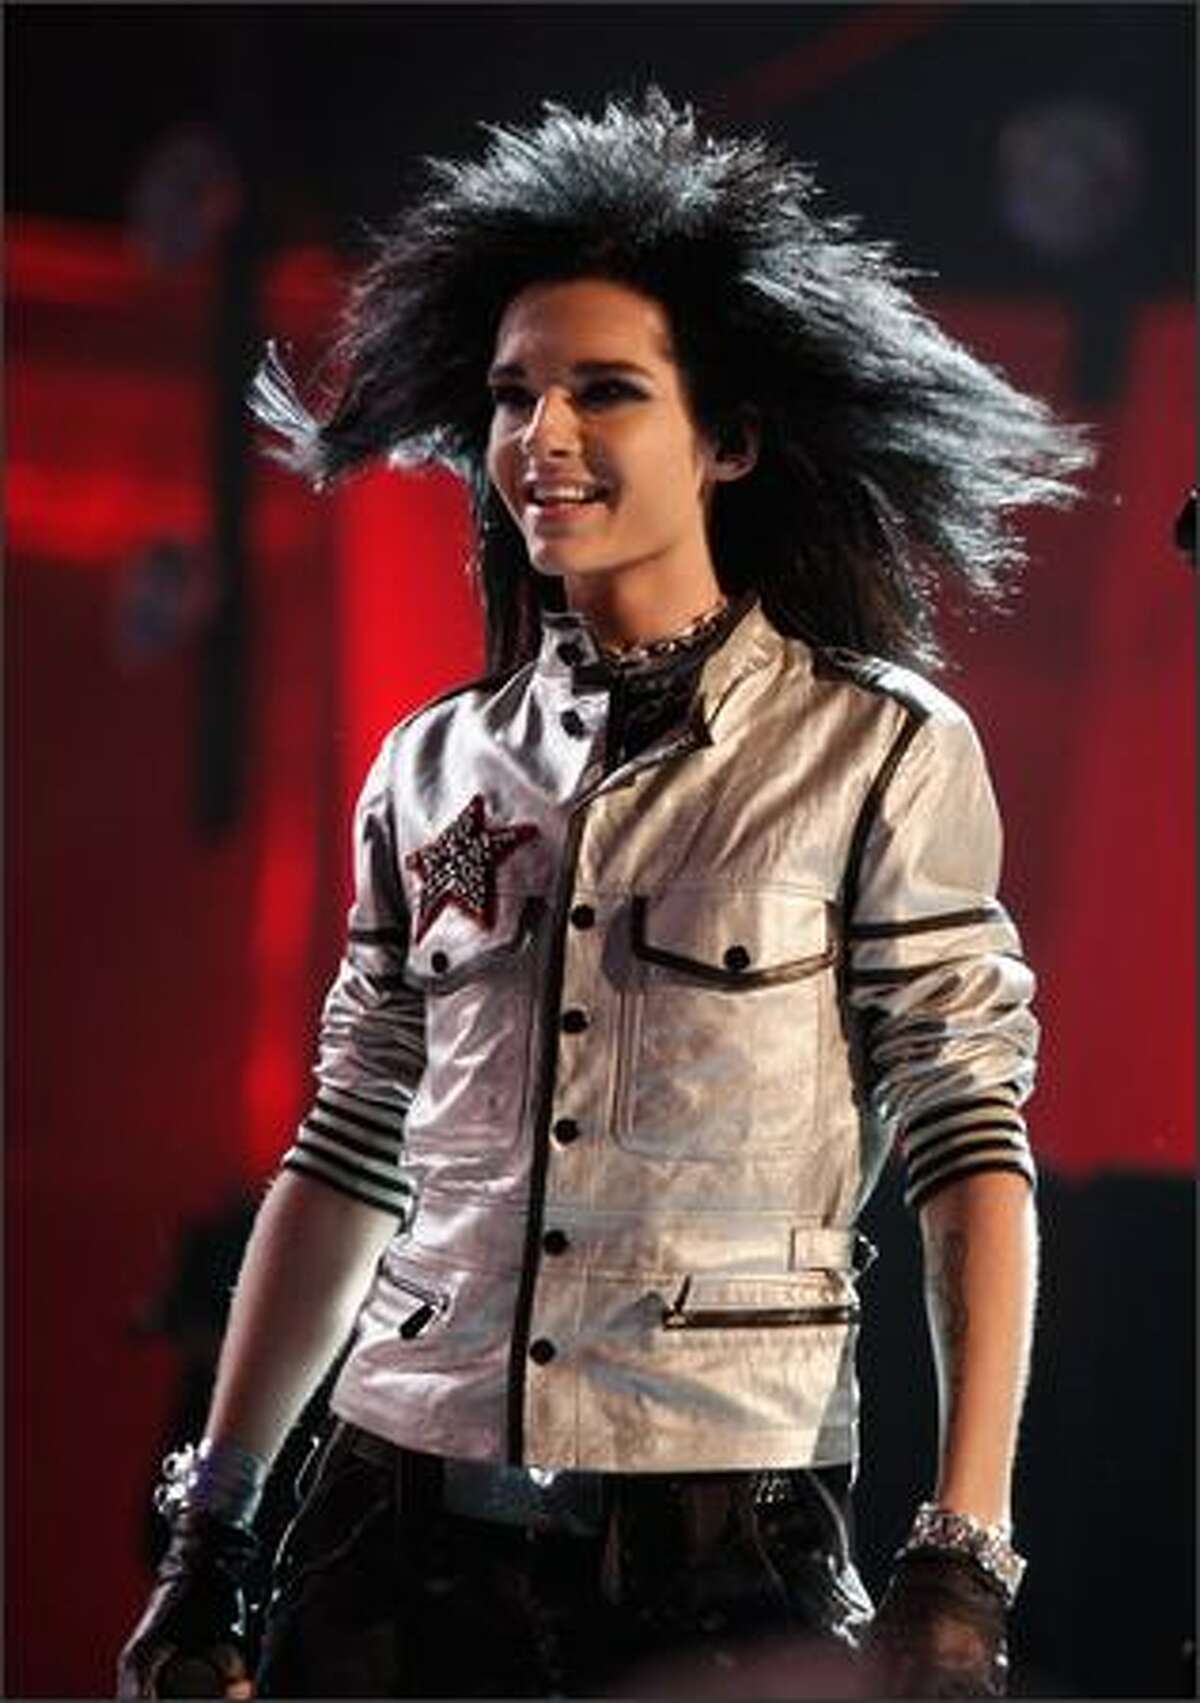 Musician Bill Kaulitz of Tokio Hotel performs.